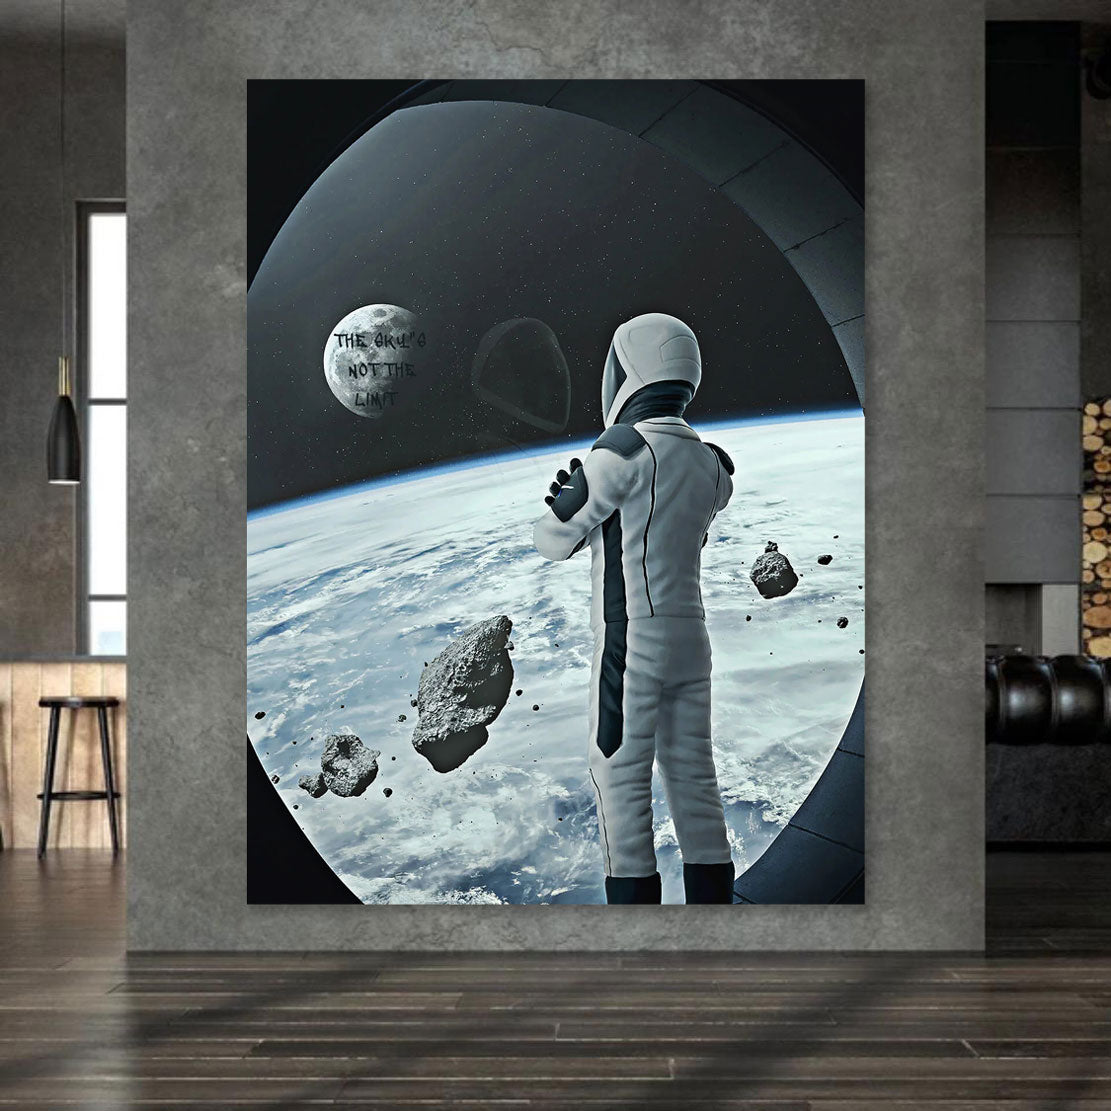 Waltkarte & Weltraum Wandbilder in schwarz grau auf Leinwand 